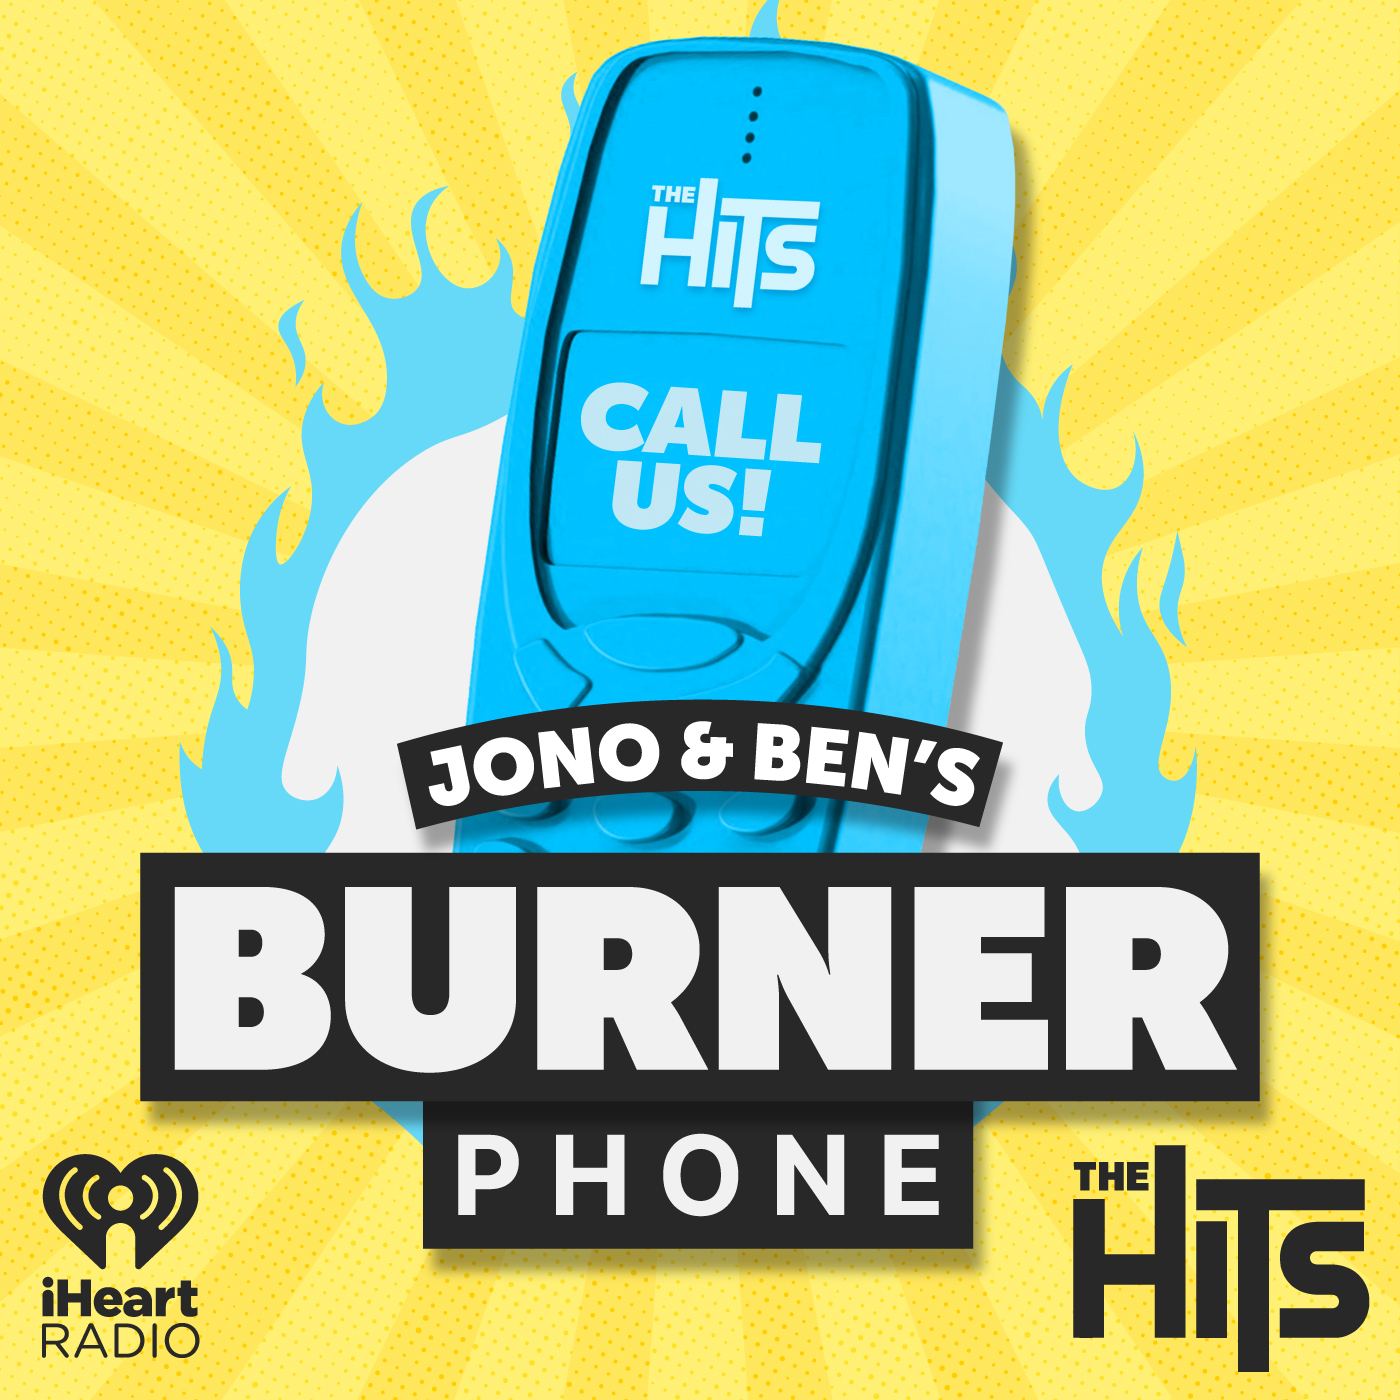 The Burner Phone 8: Friday